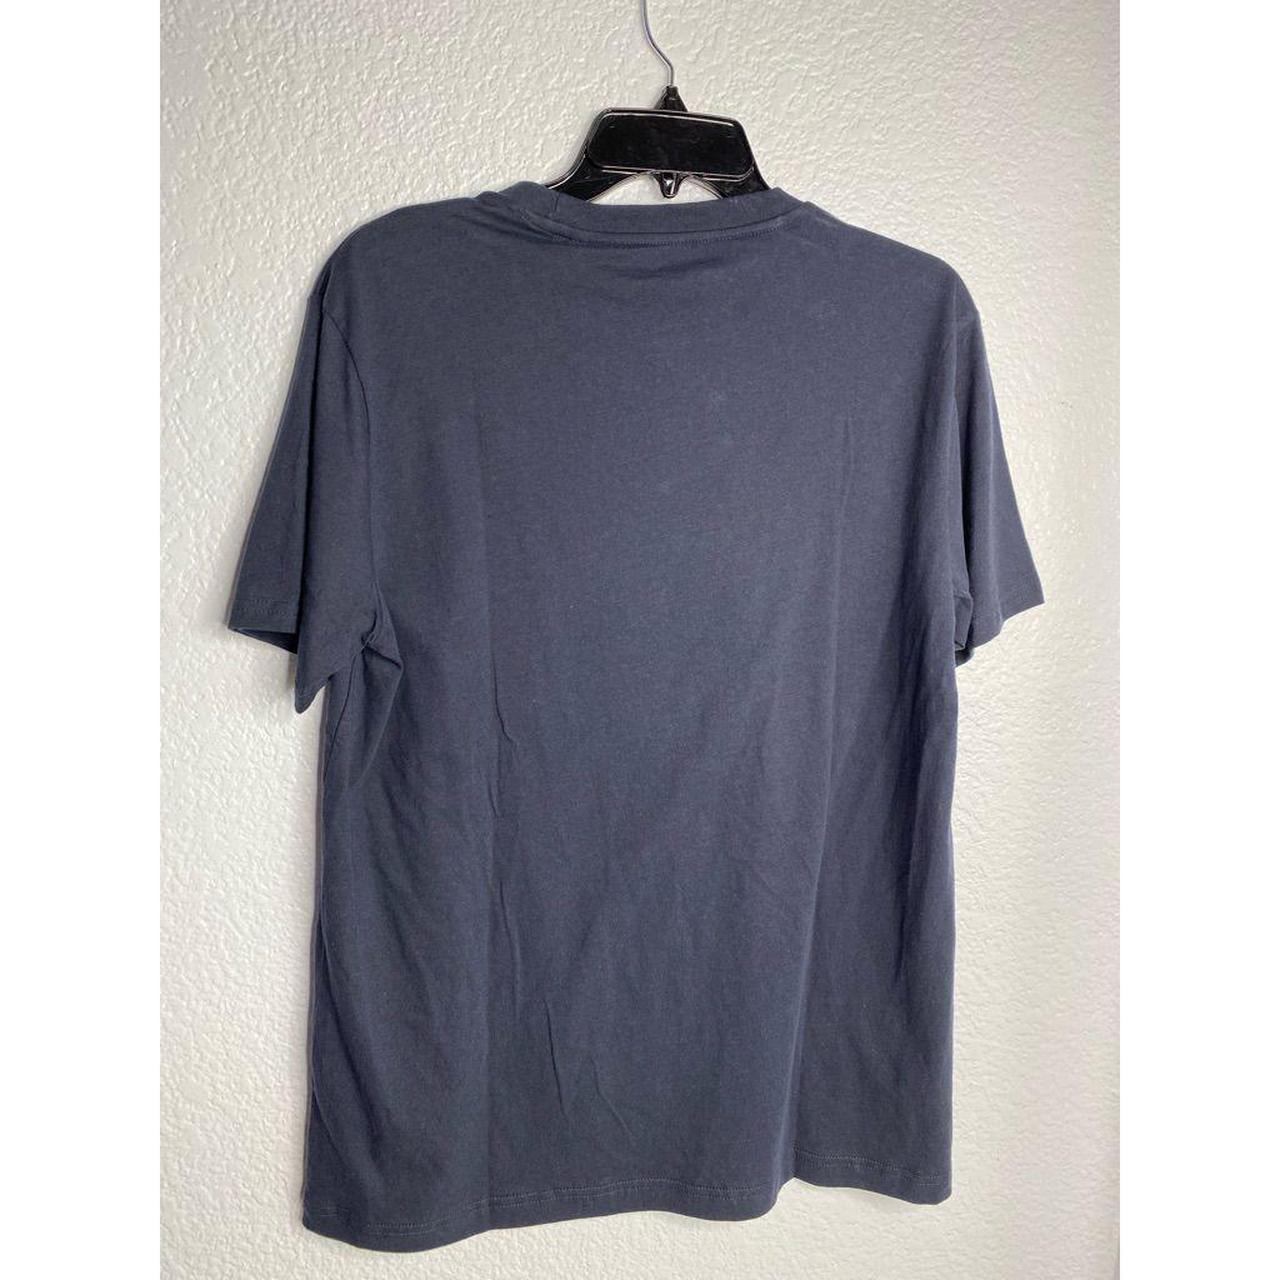 Product Image 4 - Penguin by Munsingwear Blue T-Shirt